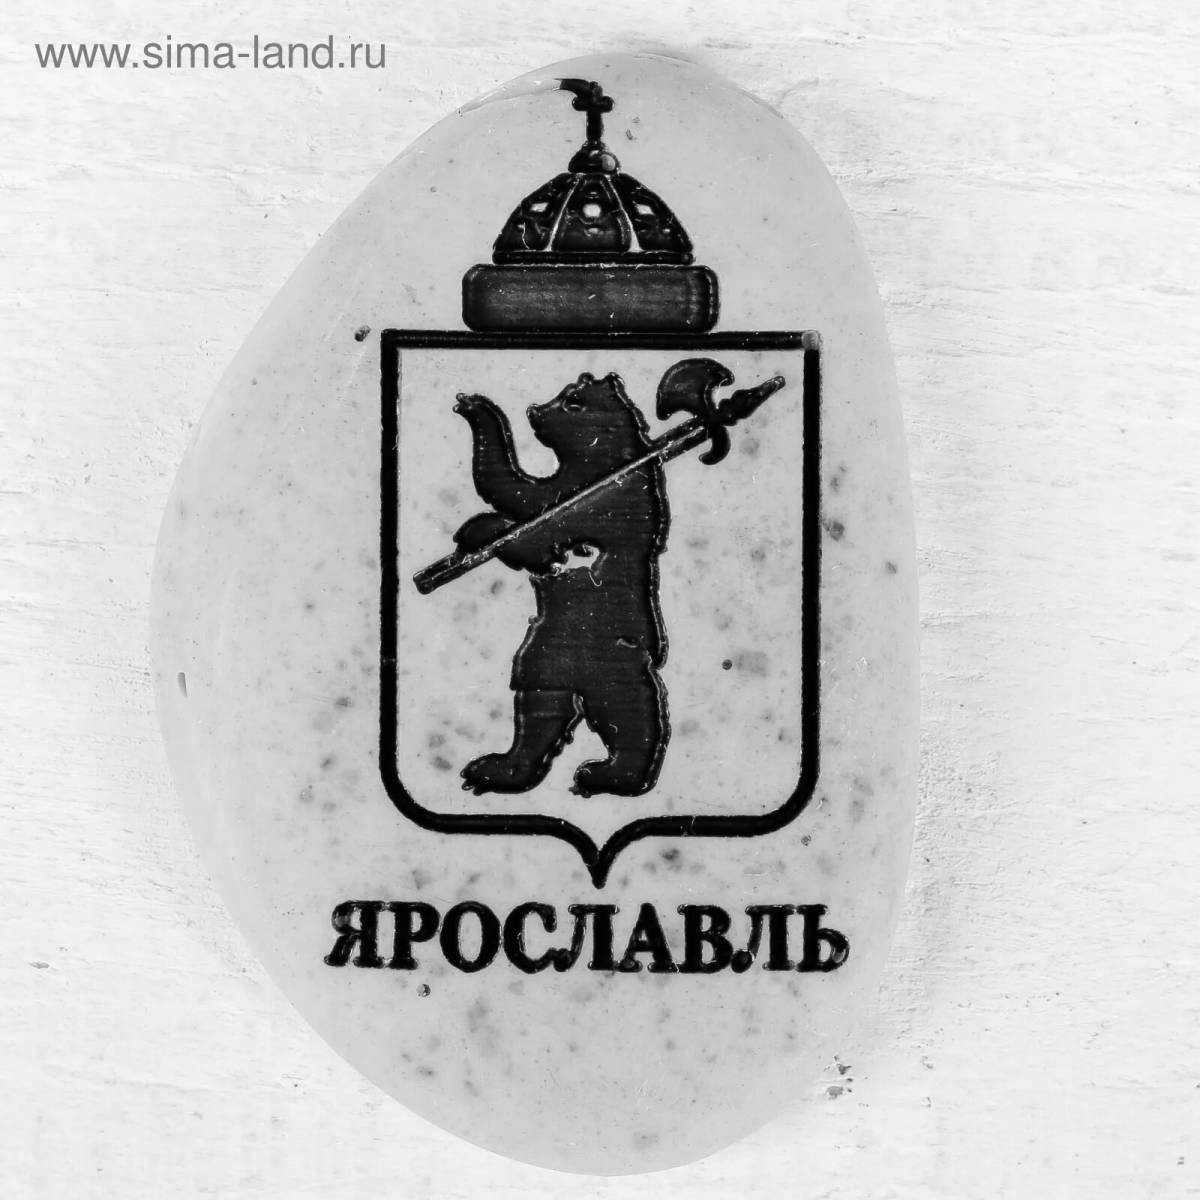 Impressive coat of arms of Yaroslavl for preschoolers